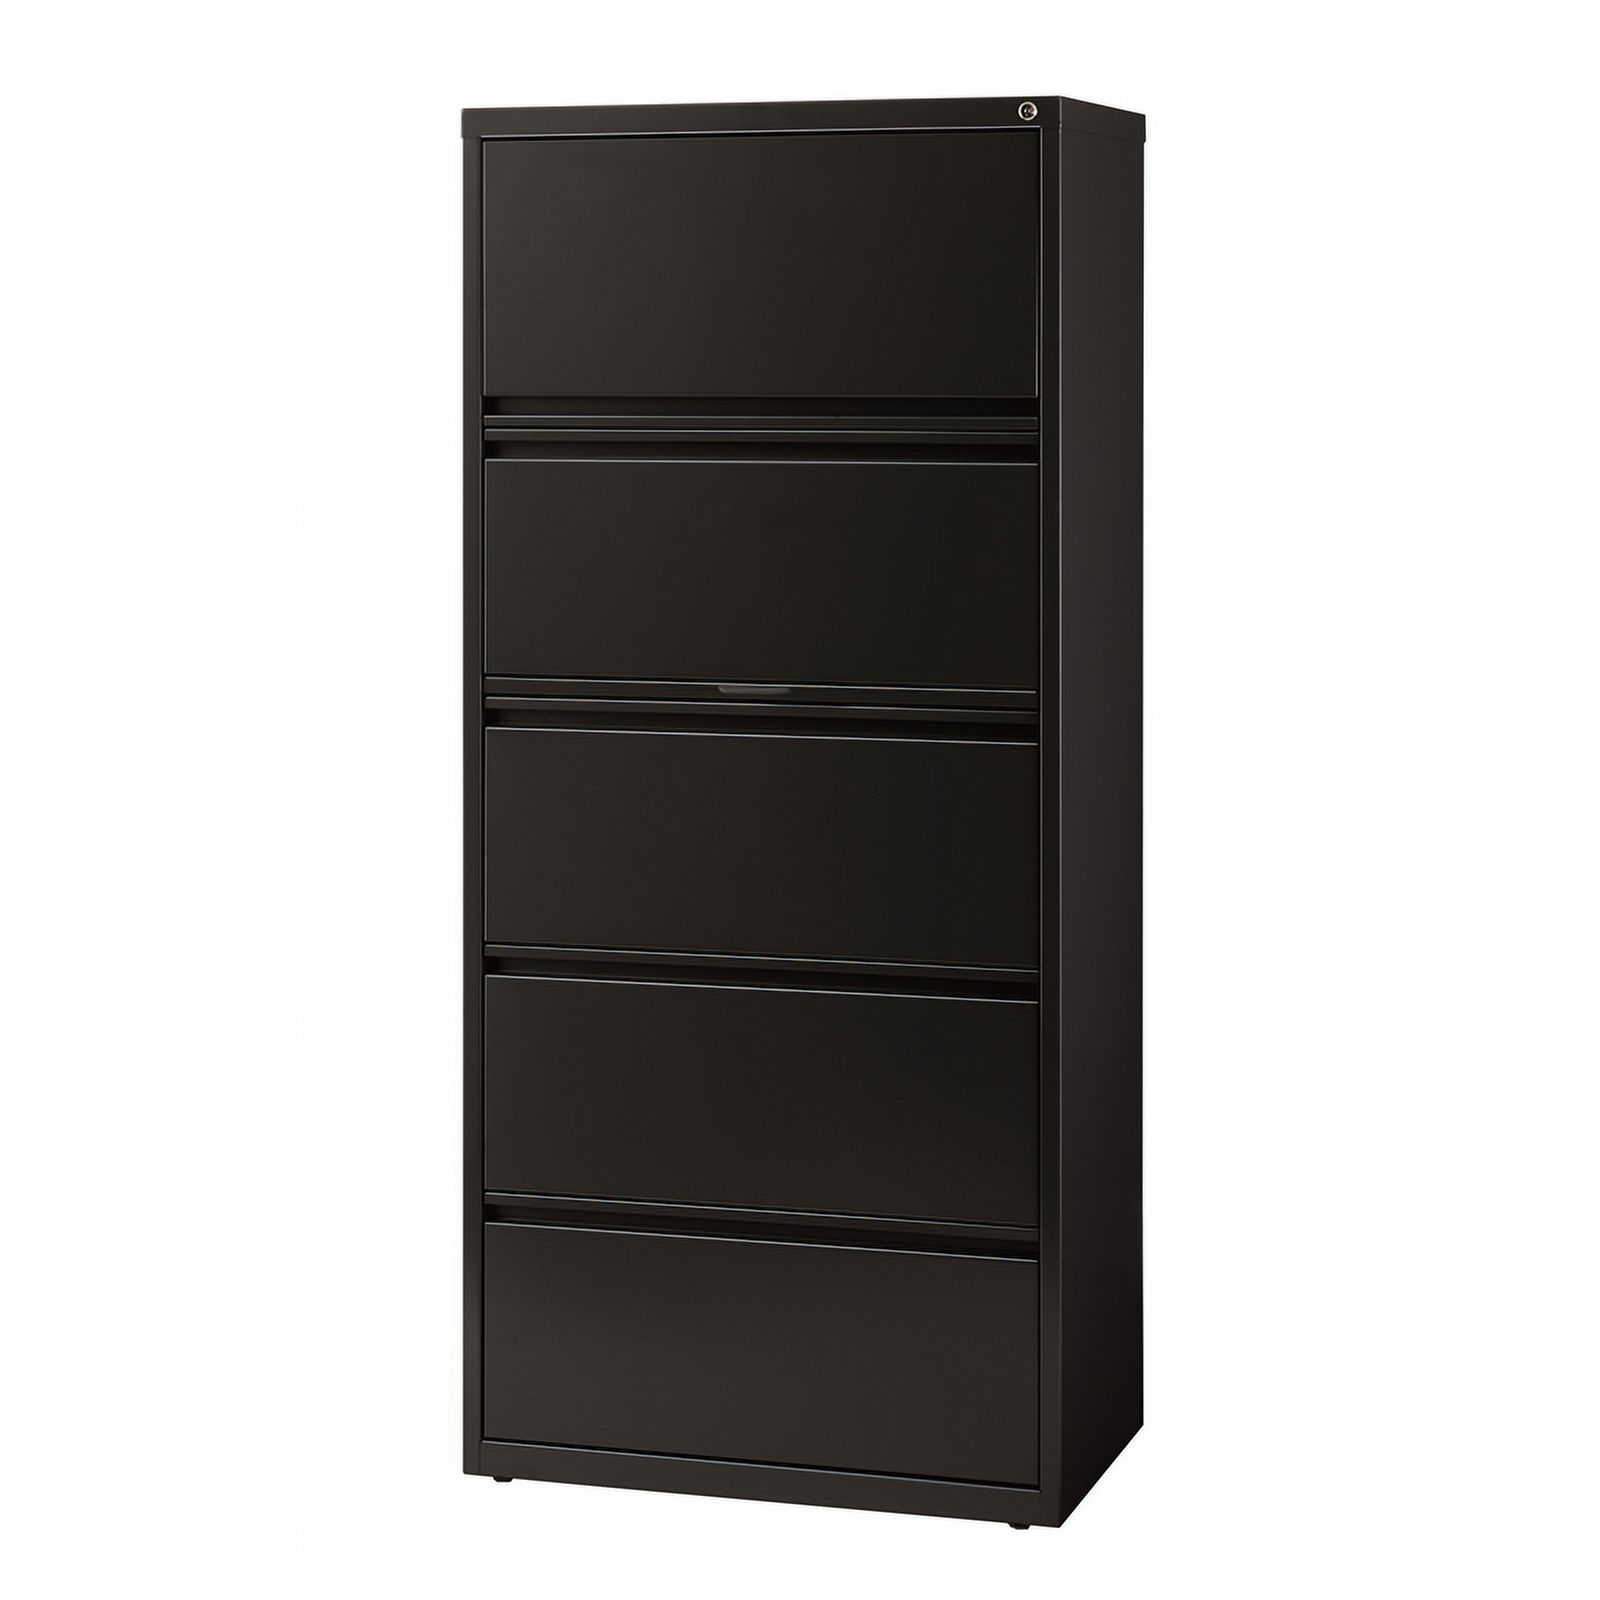 Scranton & Co 30" 5-Drawer Modern Metal Lateral File Cabinet in Black - image 2 of 6